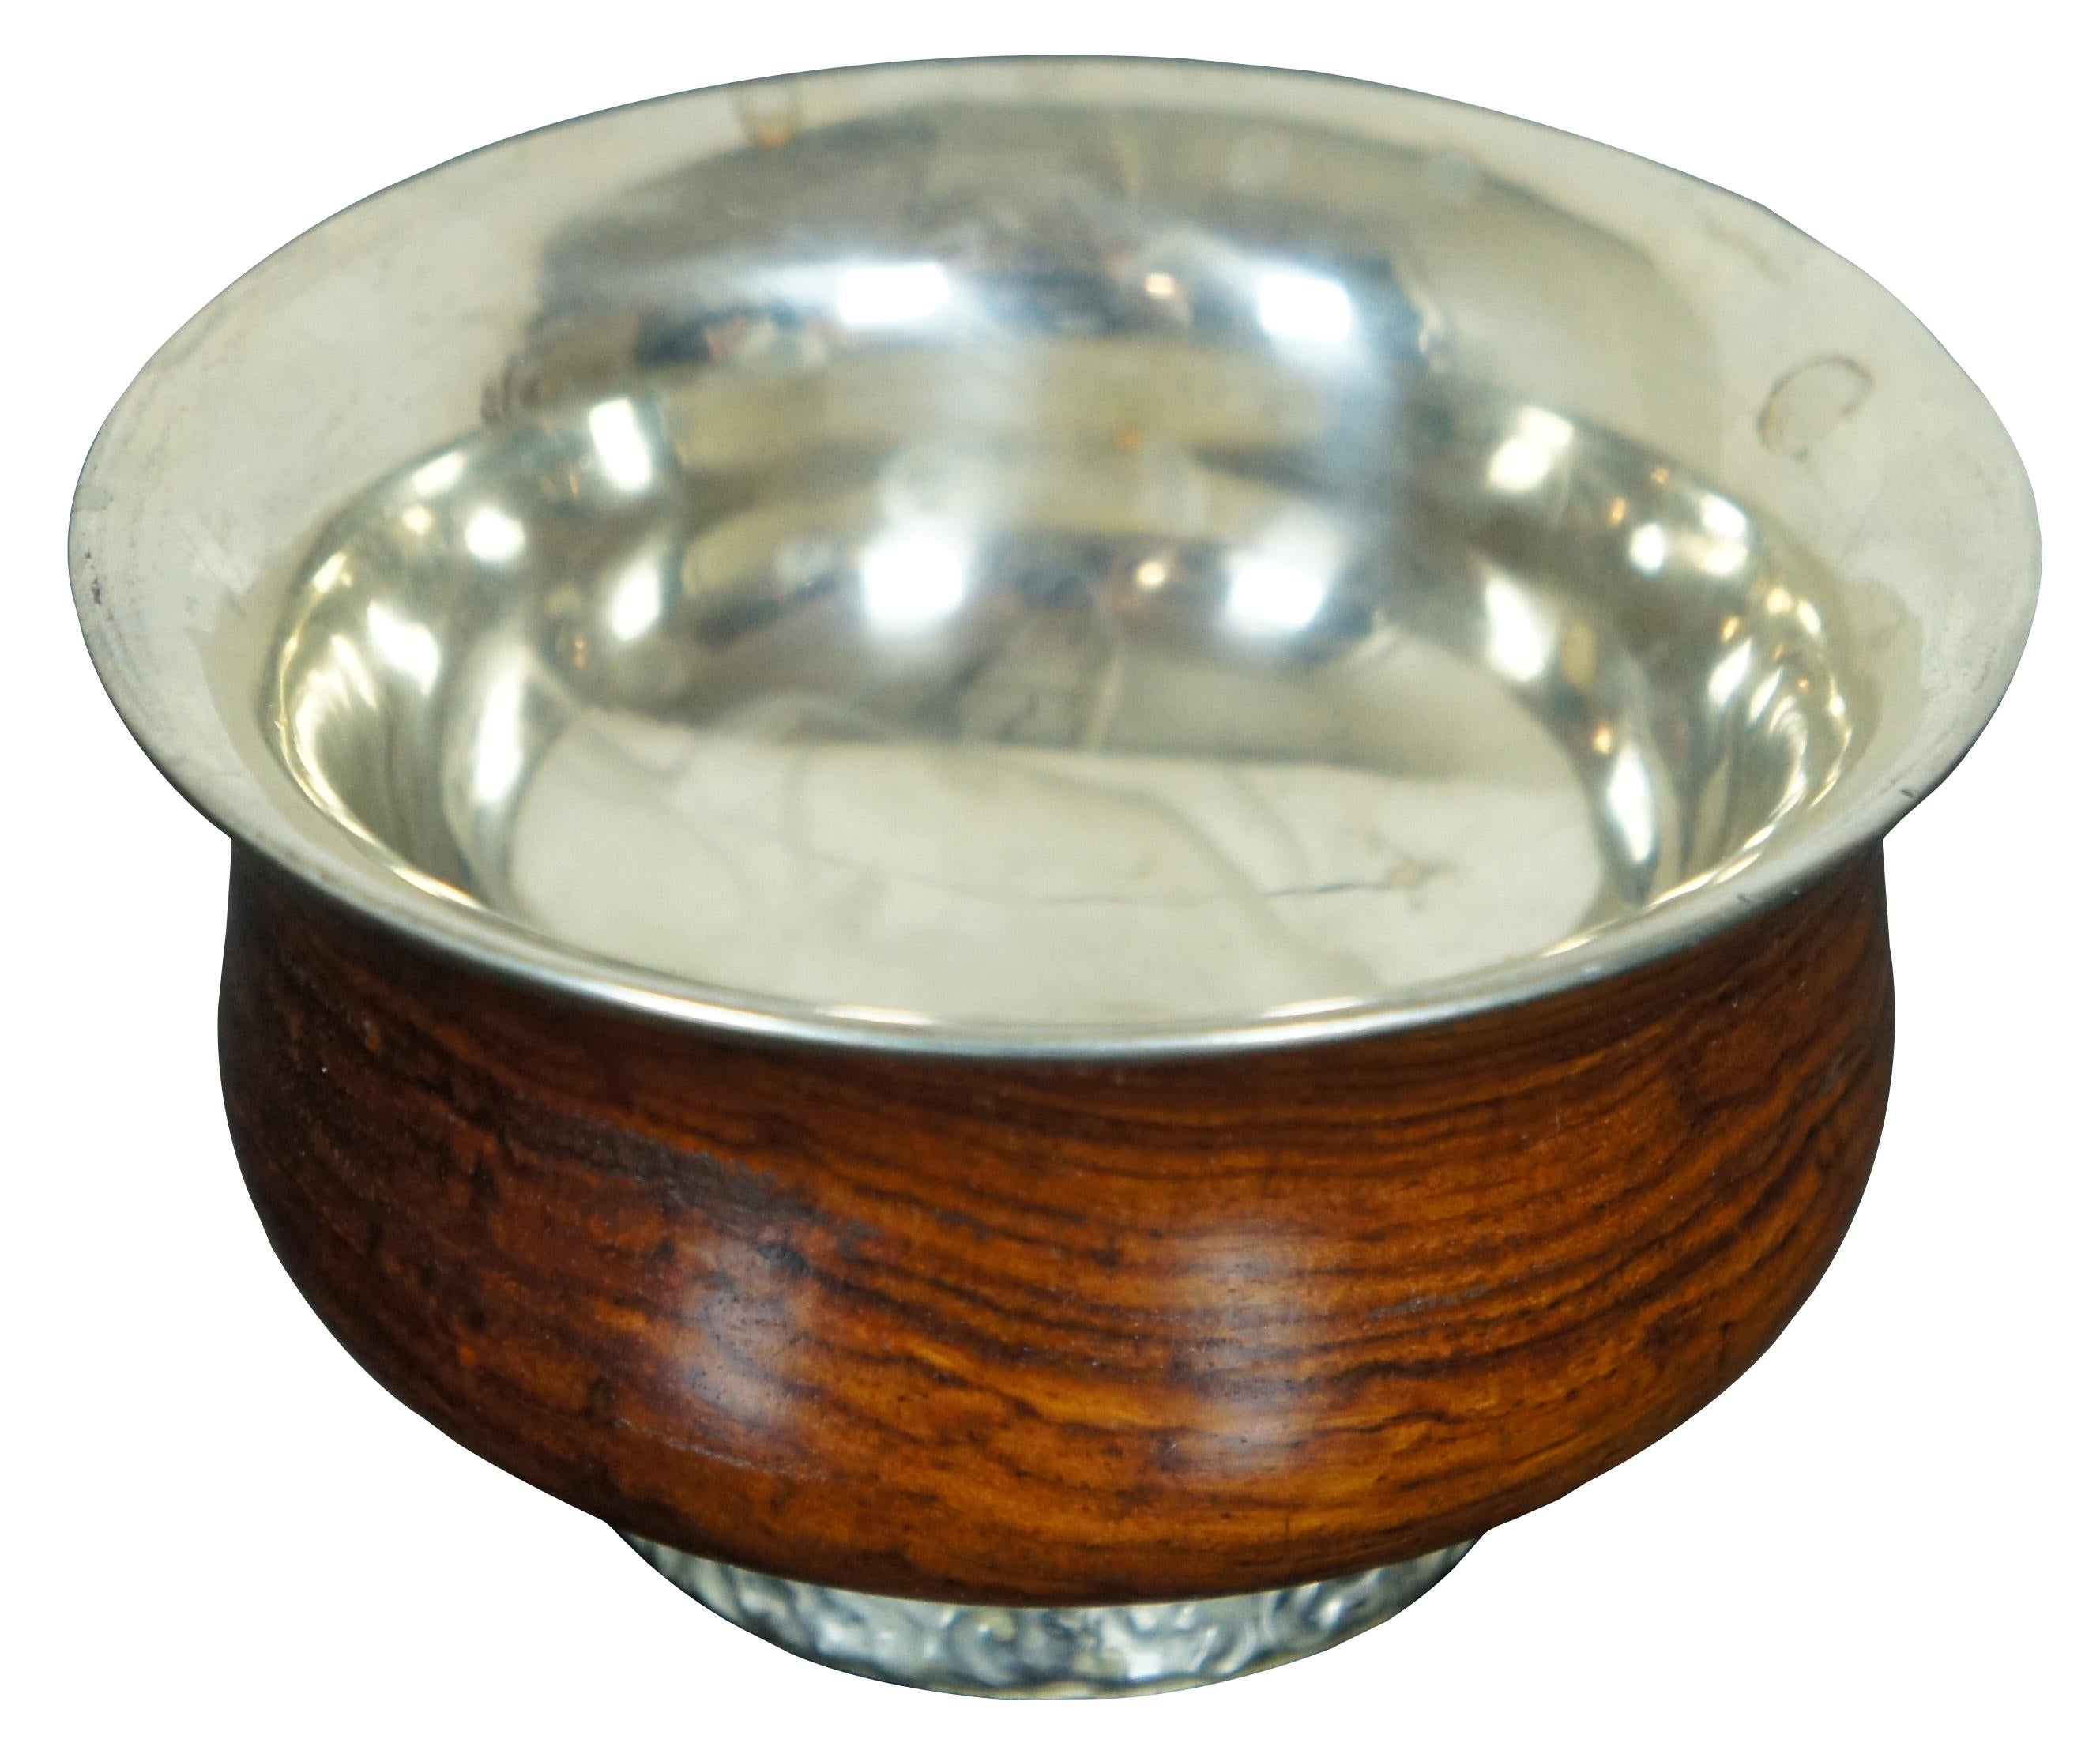 Vintage Chinese Tebetan Jha Phor silver and wood libations / tea / coffee / wine / prayer bowl or cup.  